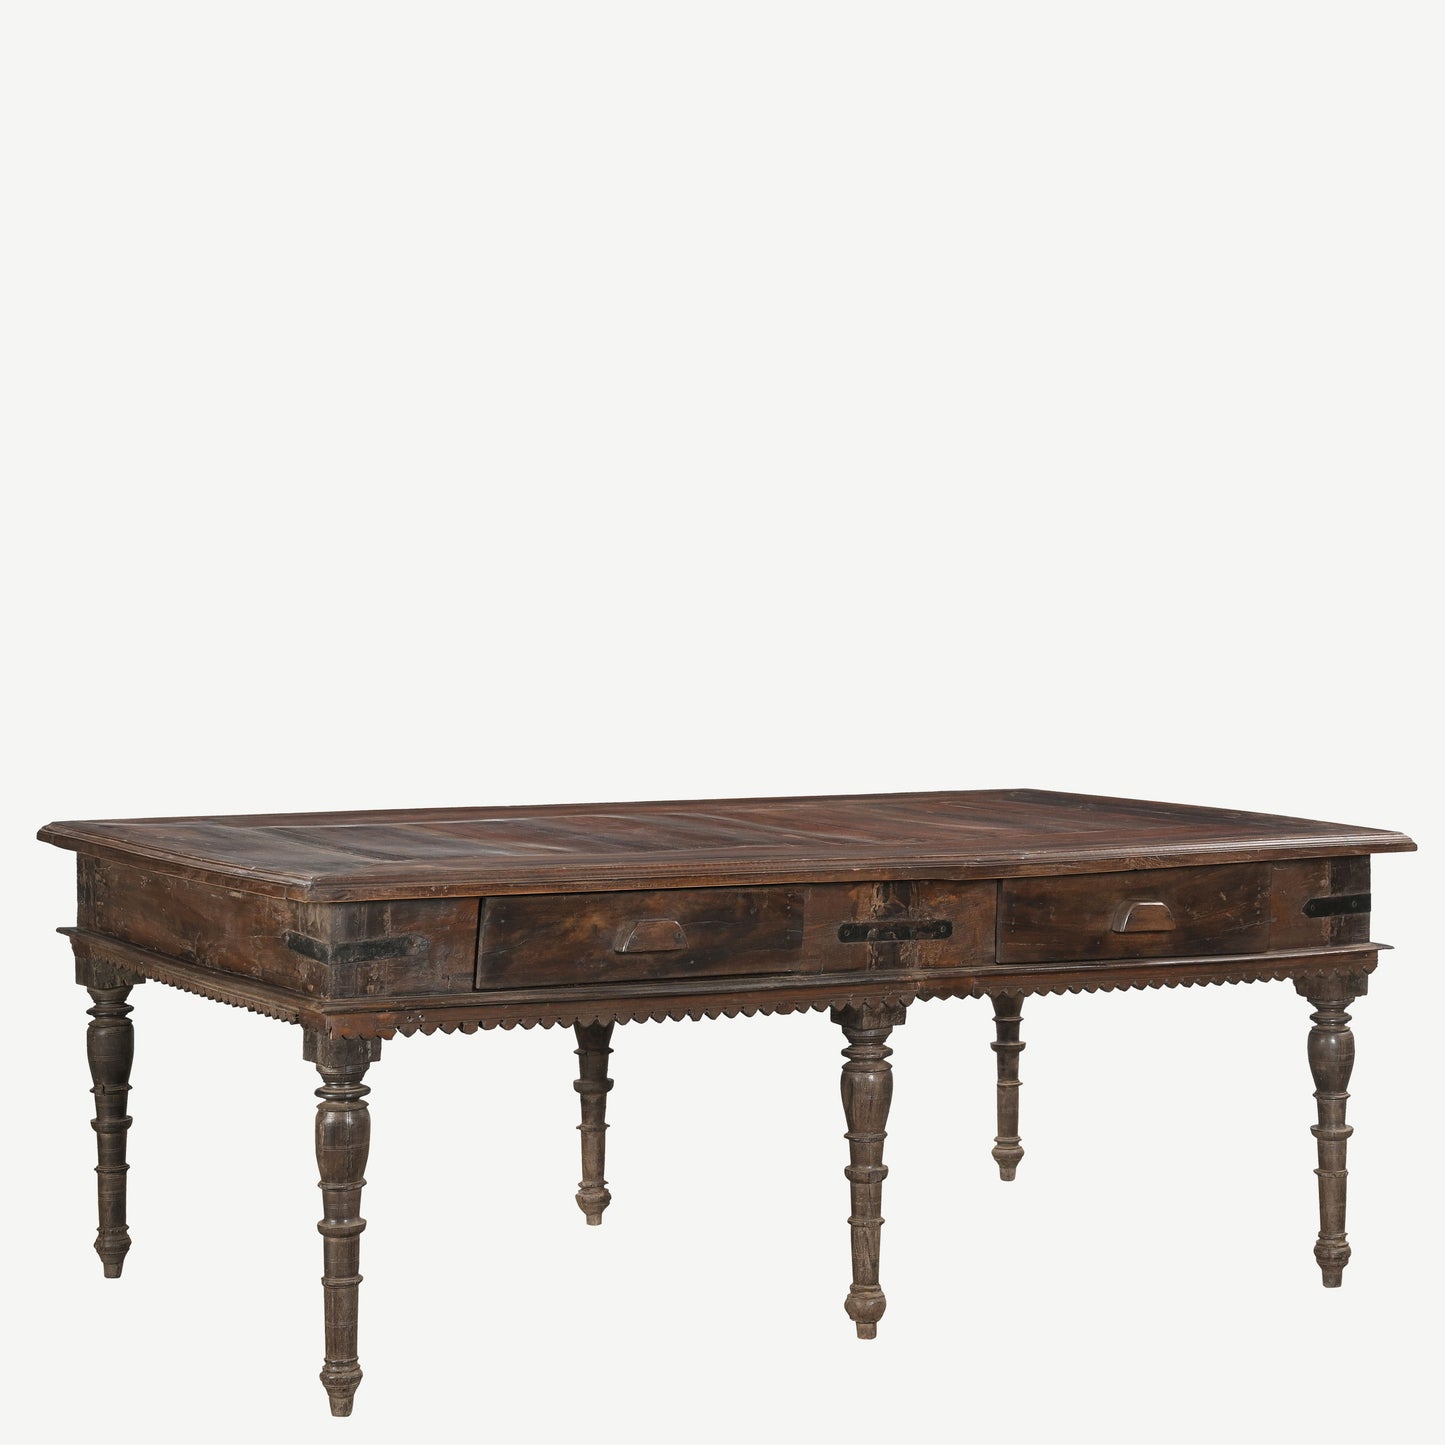 The Asha Antique Table